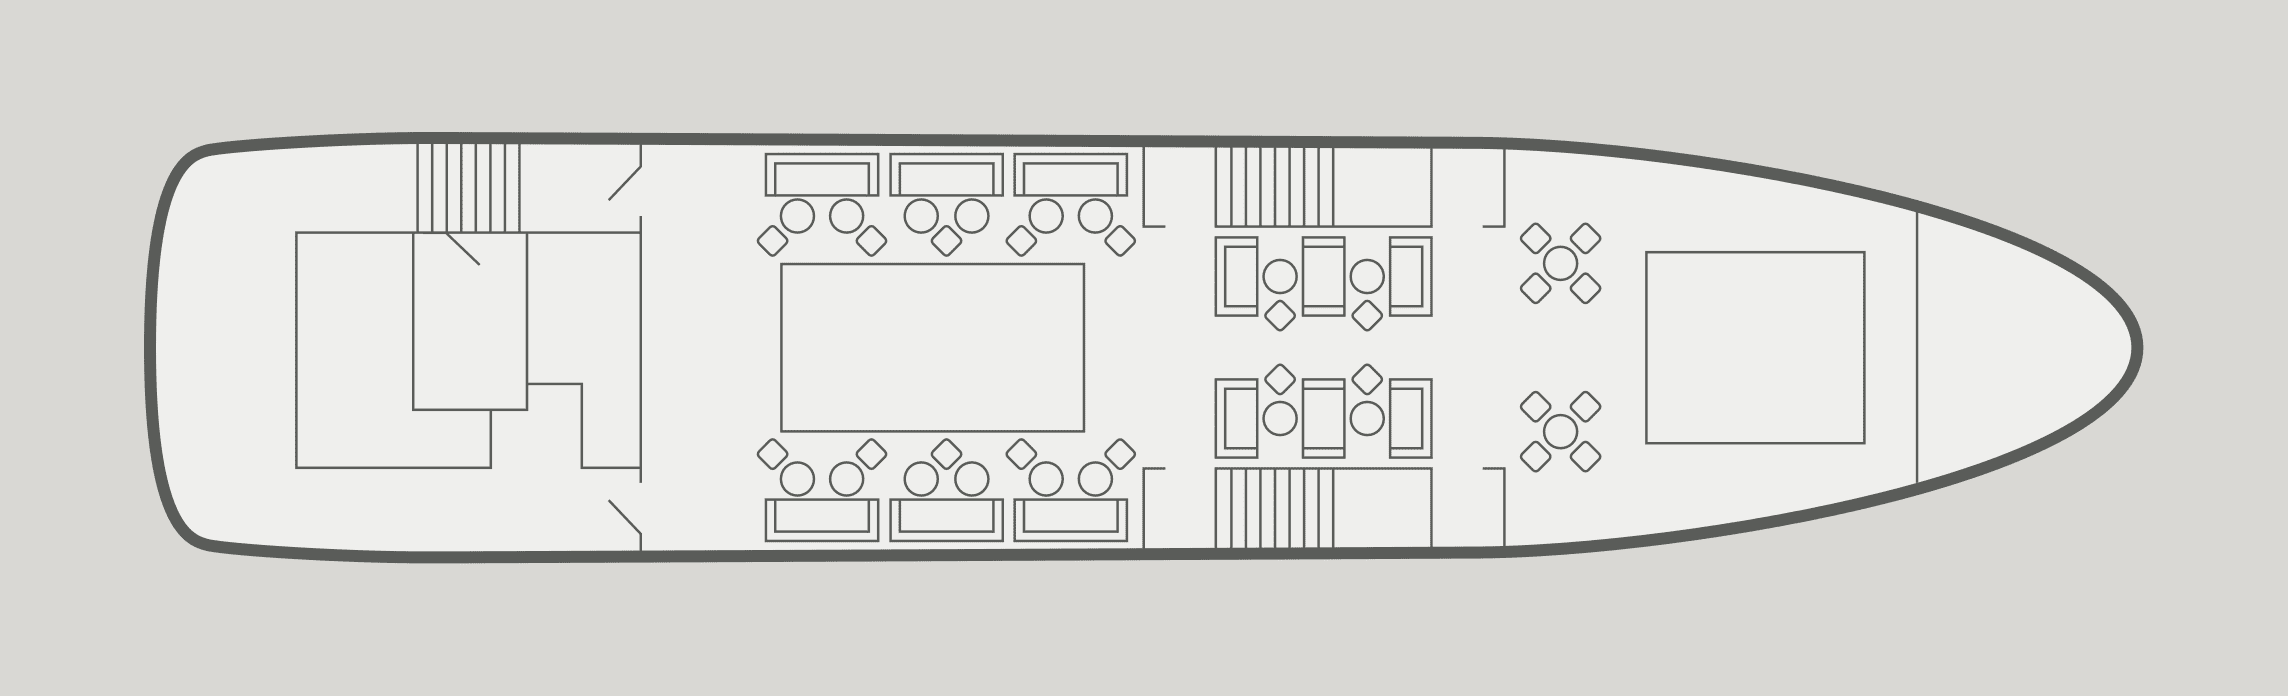 Silver Barracuda upper deck lounge floor plan